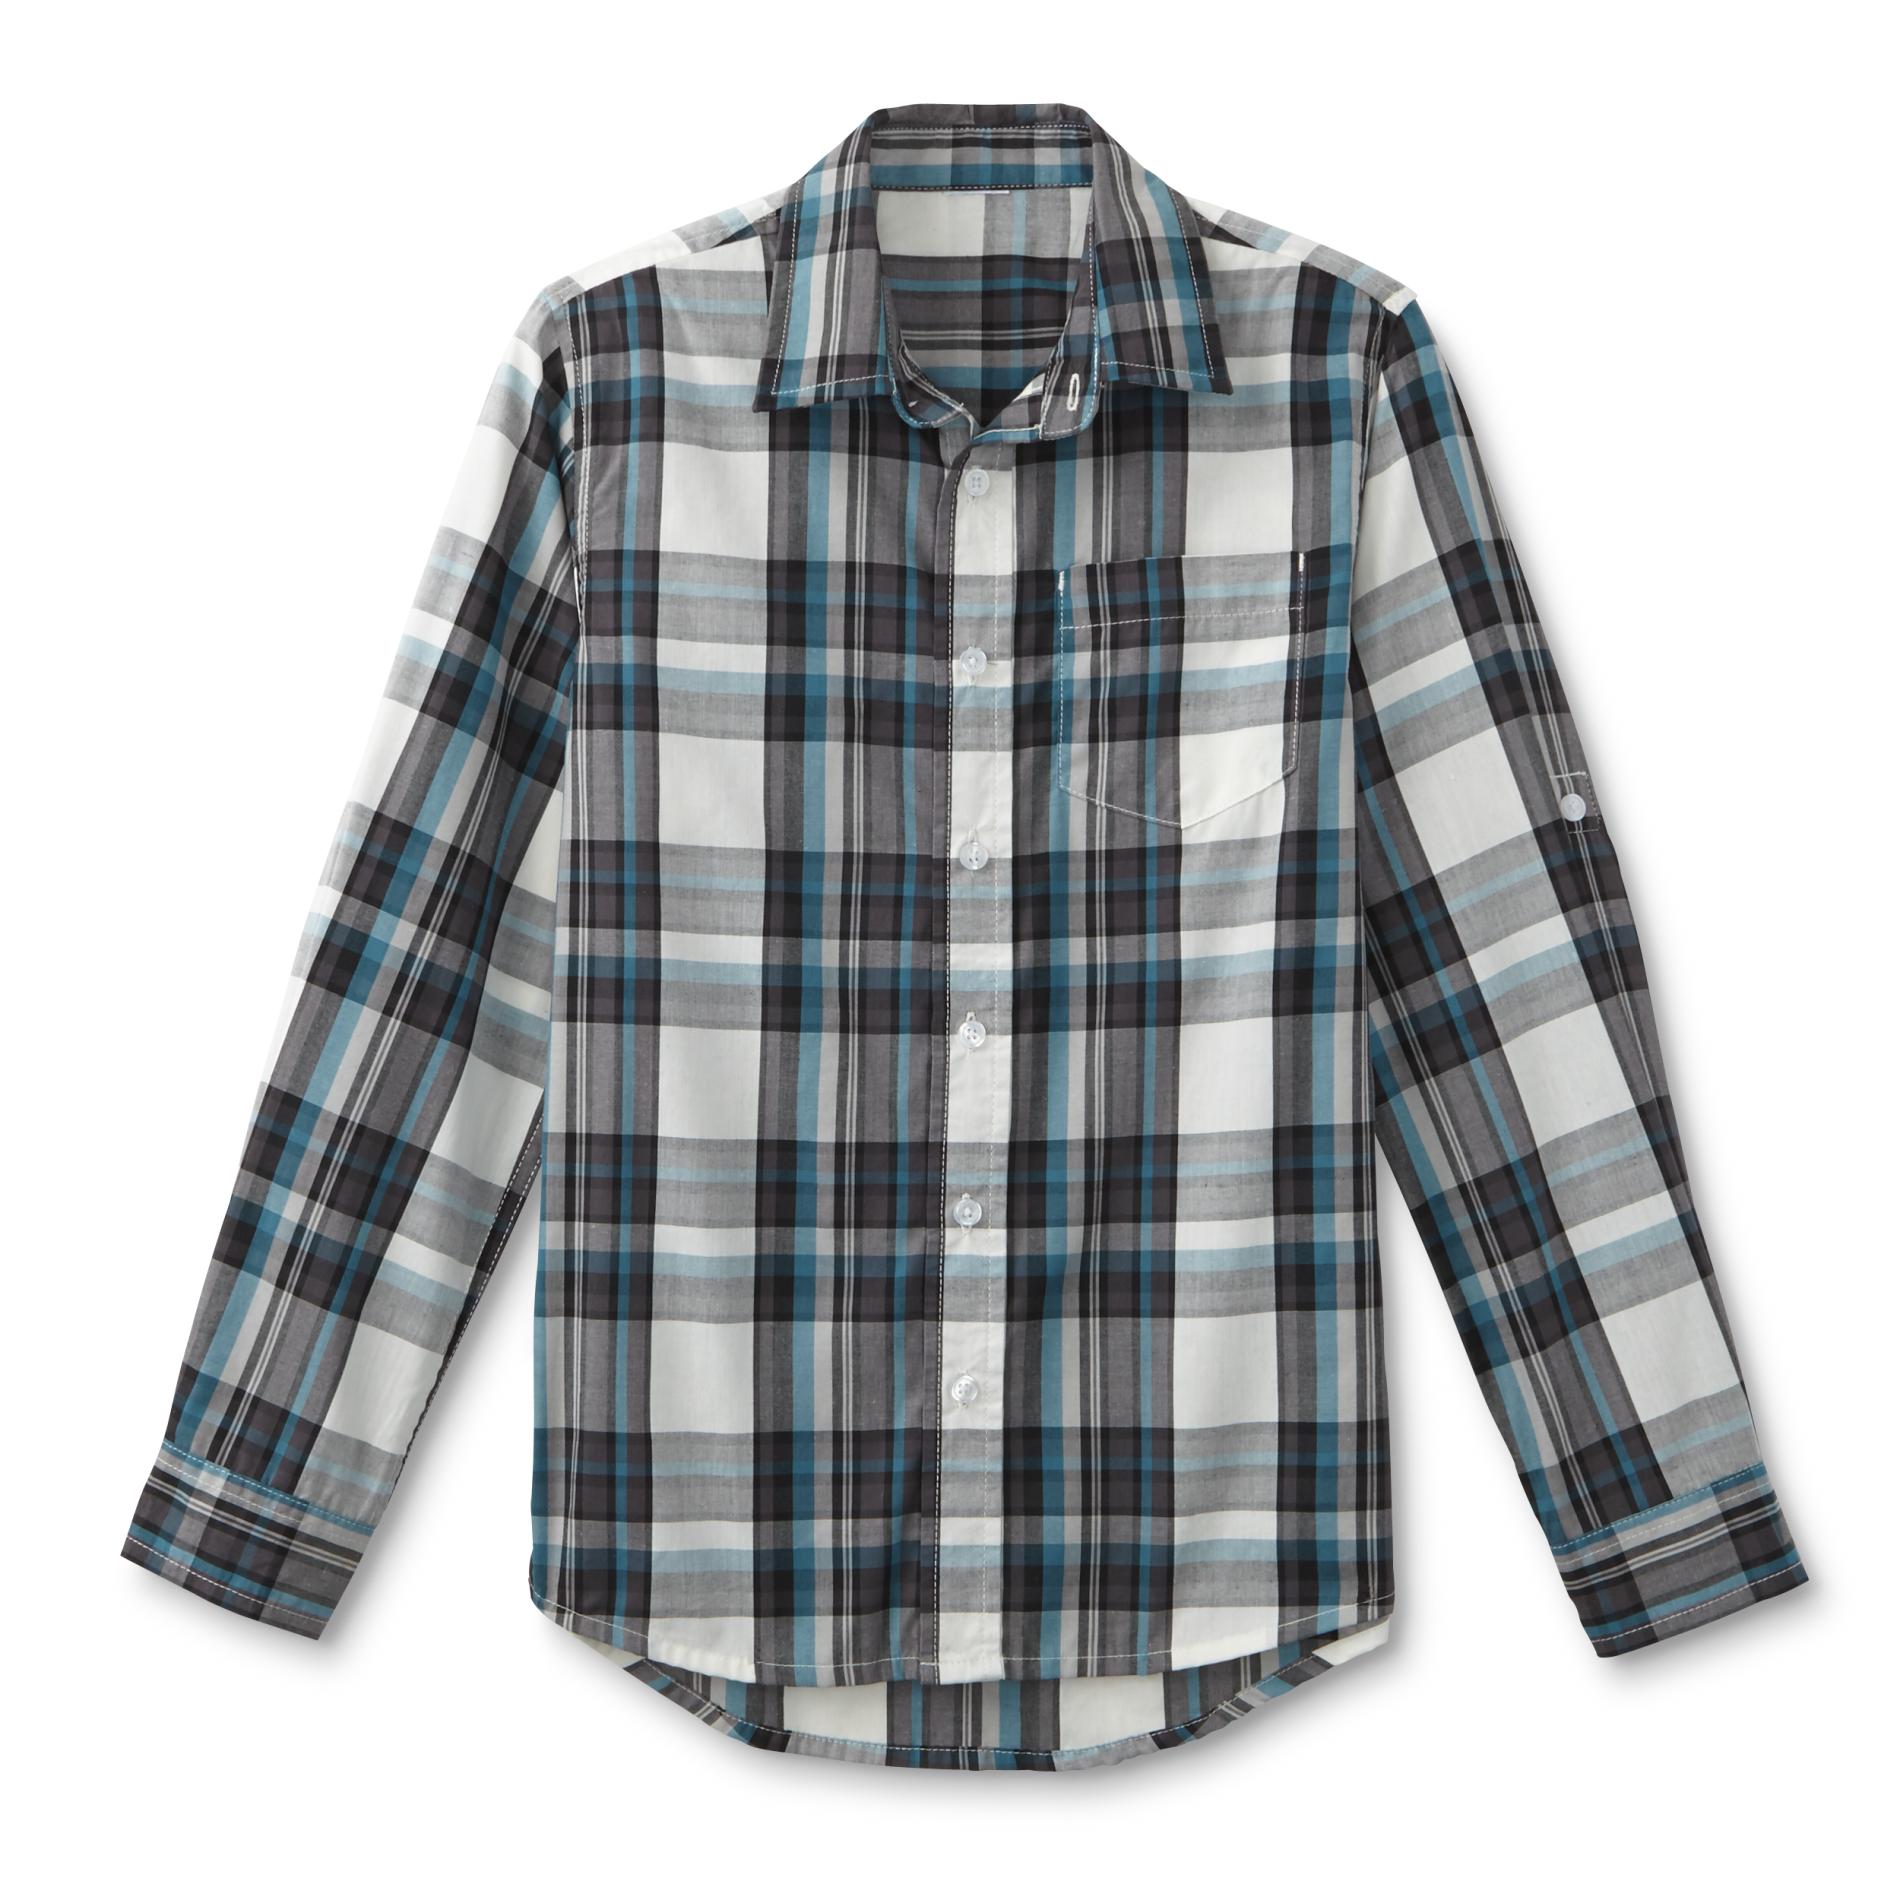 Simply Styled Boy's Long-Sleeve Shirt - Plaid